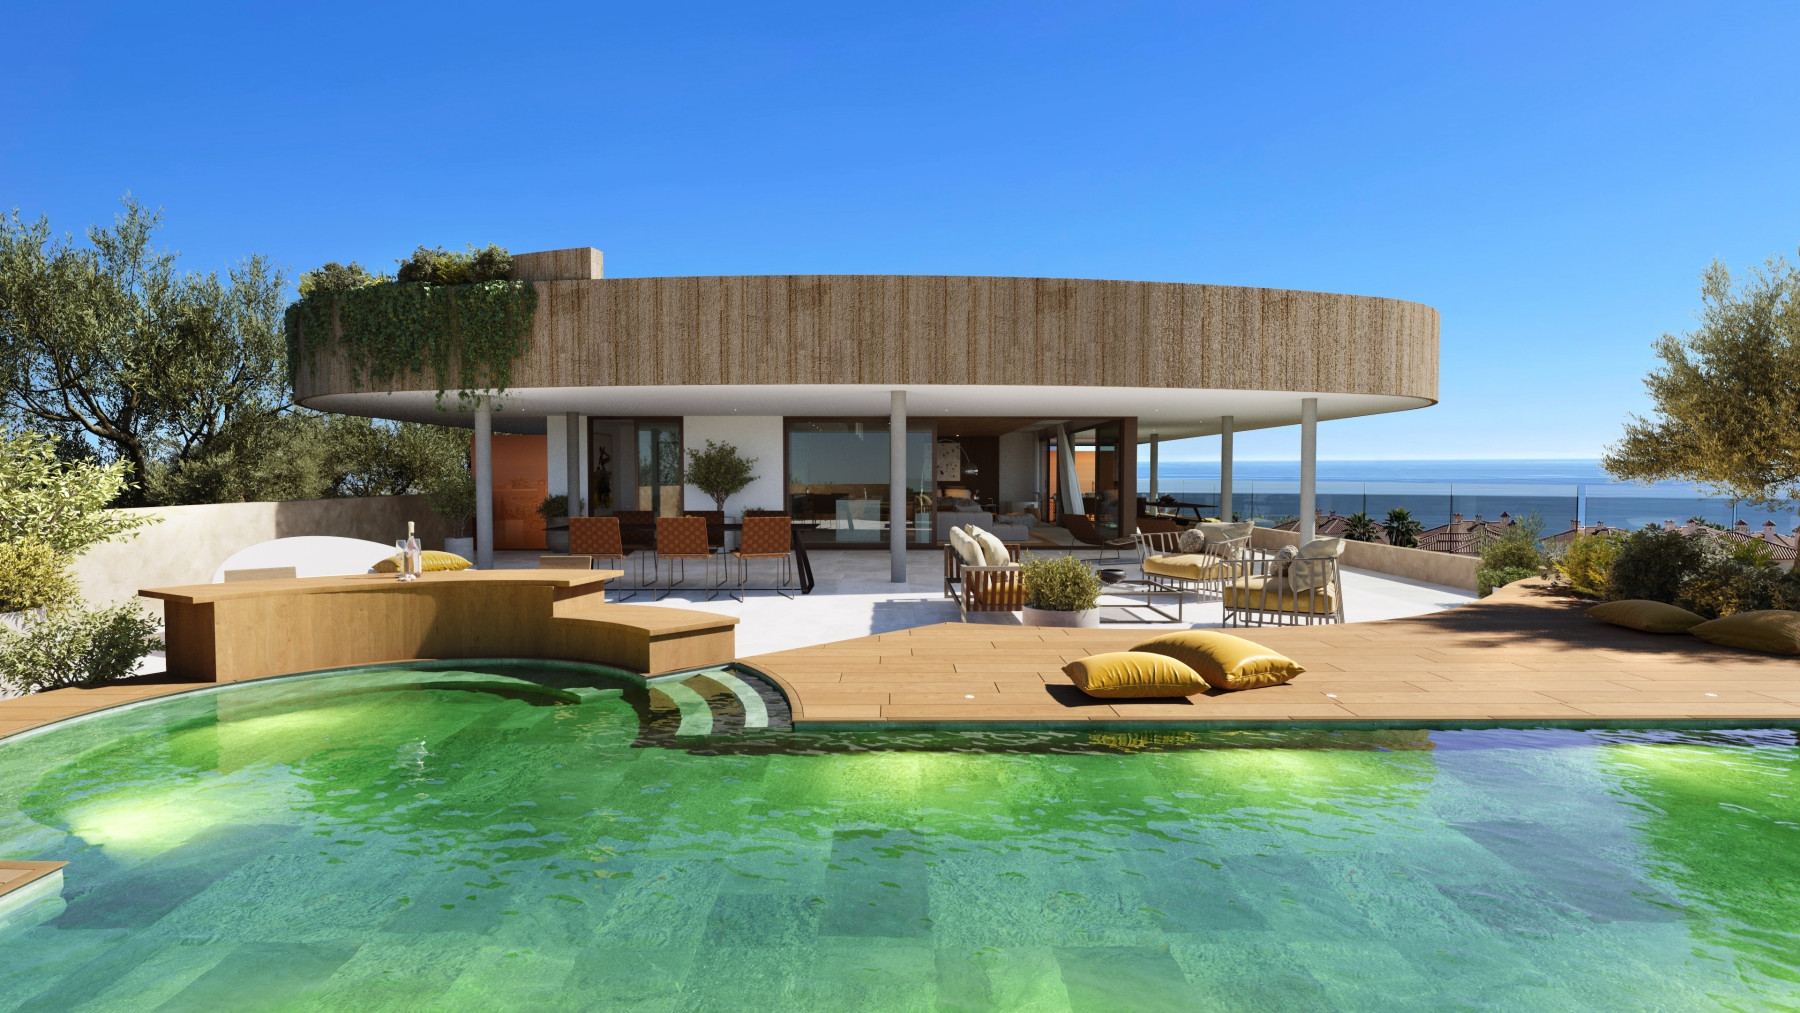 Luxury three bedroom villa with solarium and swimming pool situated in El Higueron, Fuengirola.